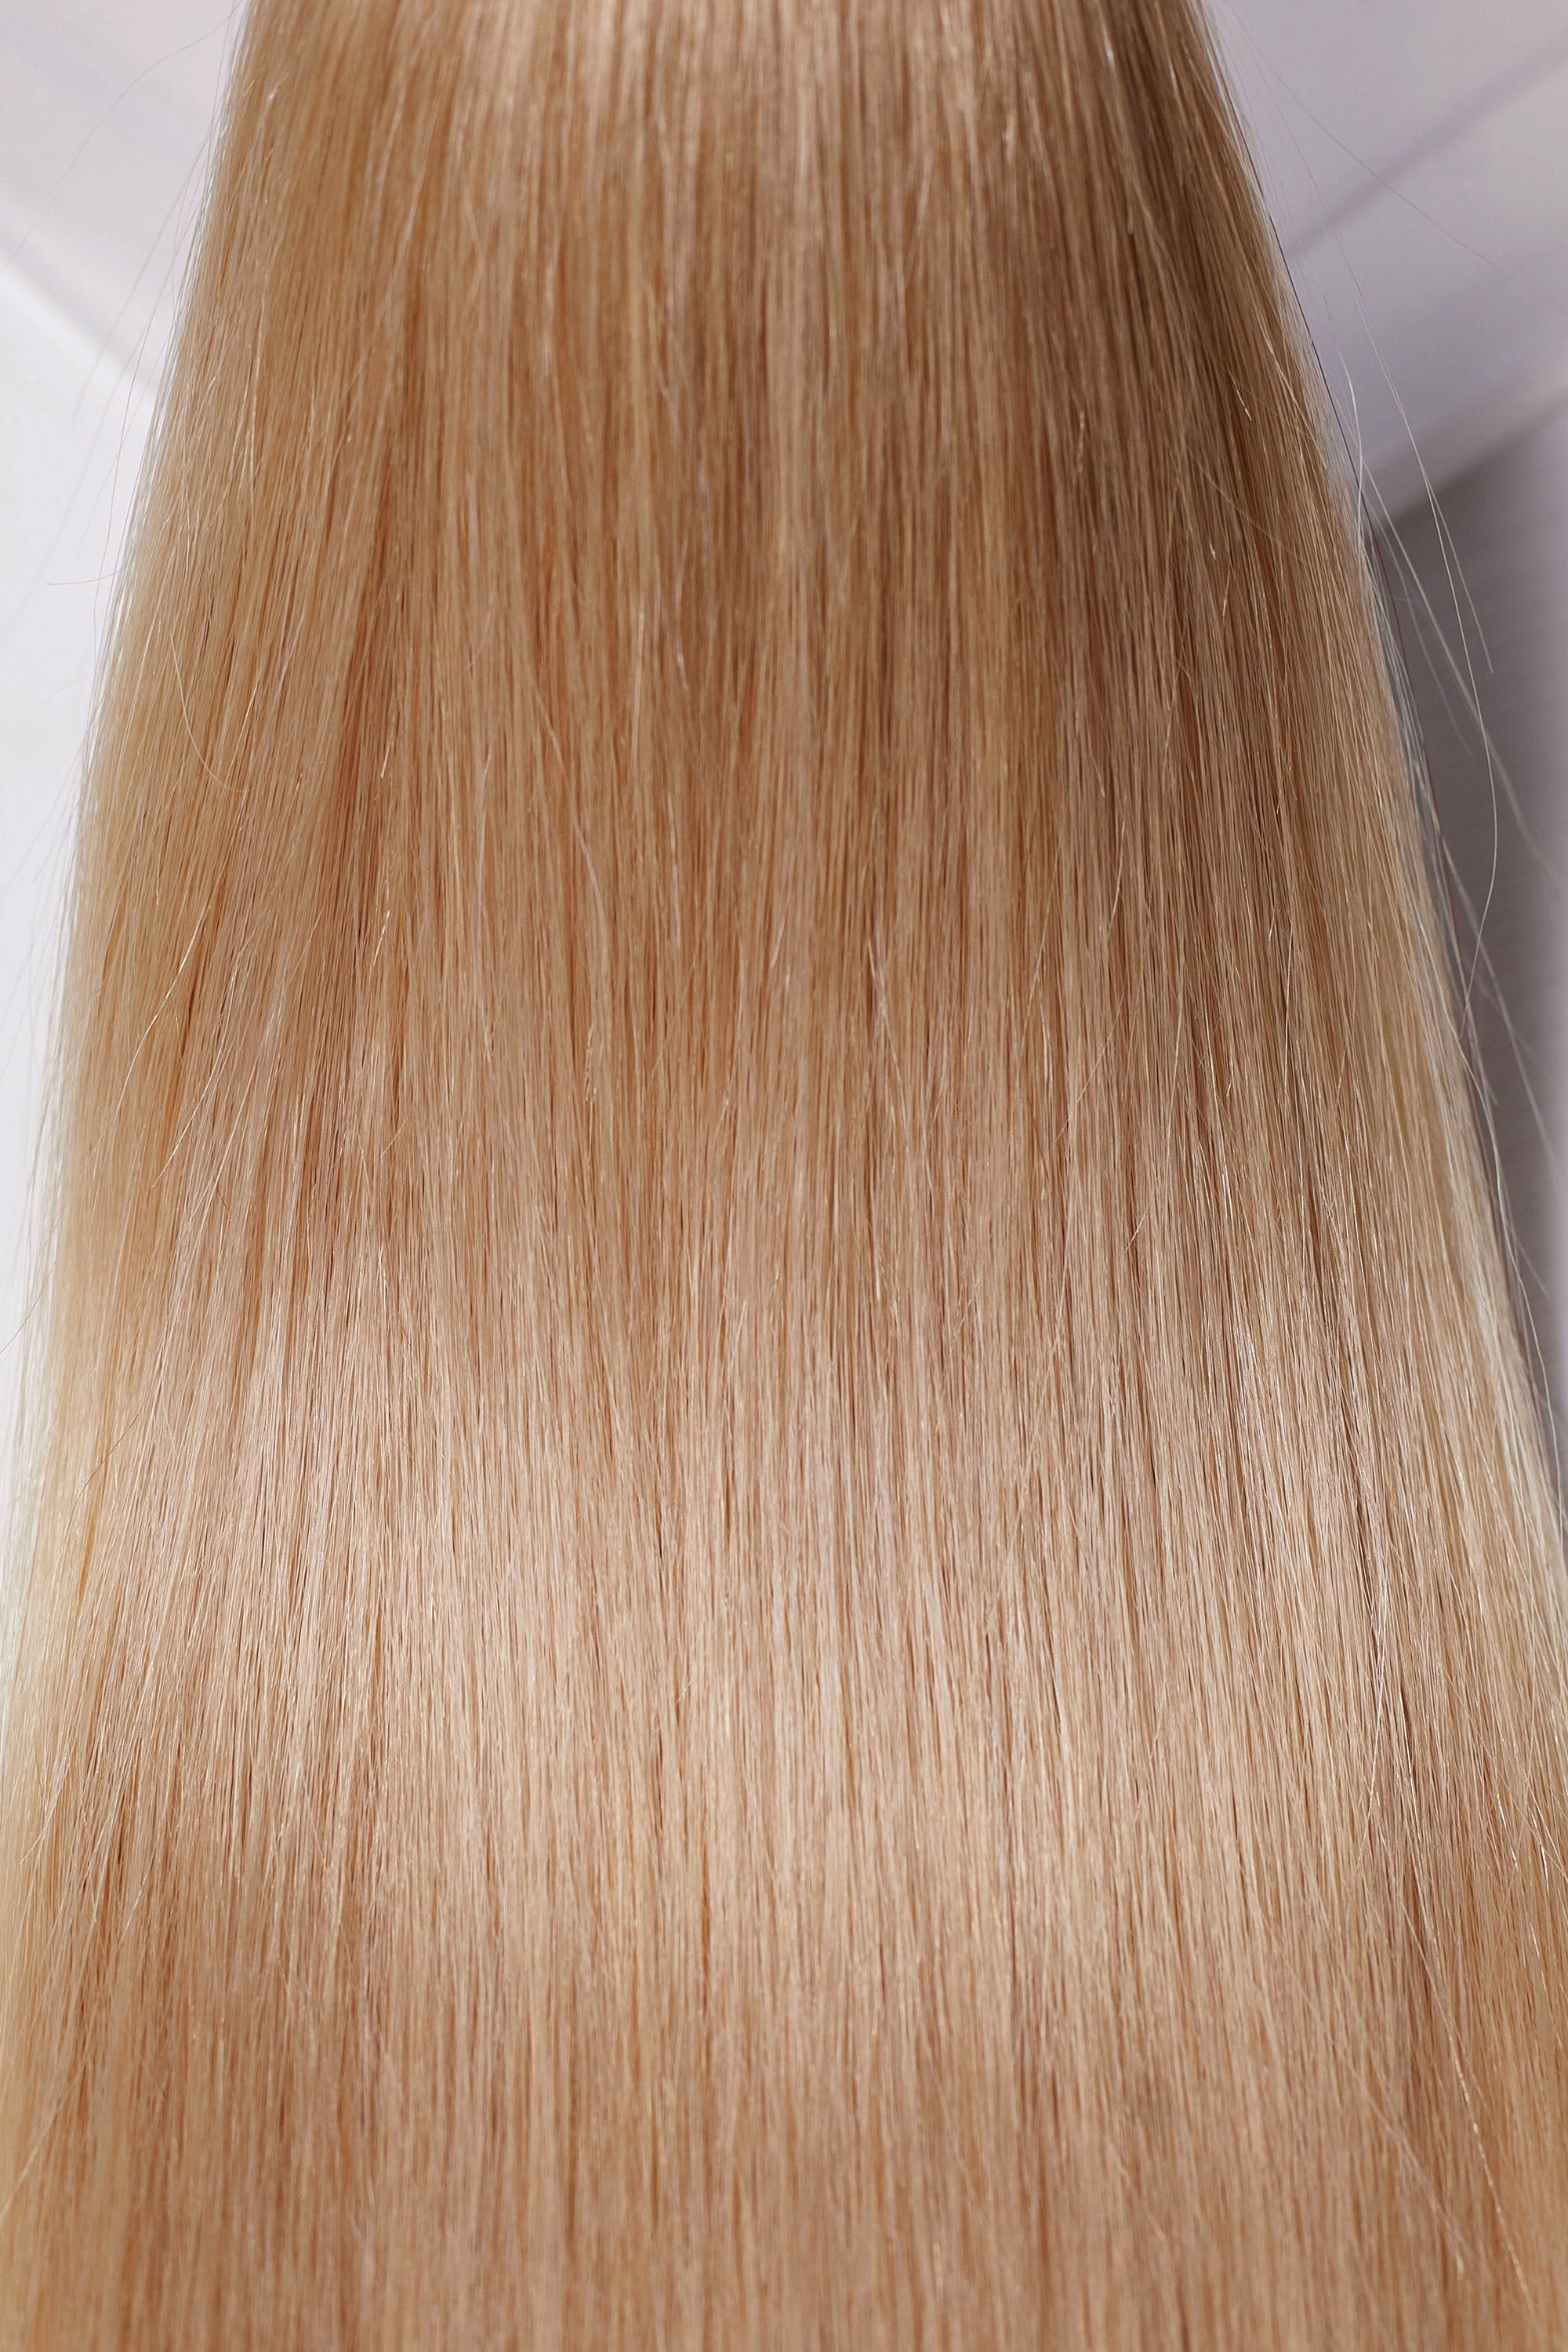 Behair professional Bulk hair "Premium" 22" (55cm) Natural Straight Light Gold Sand #16 - 25g hair extensions